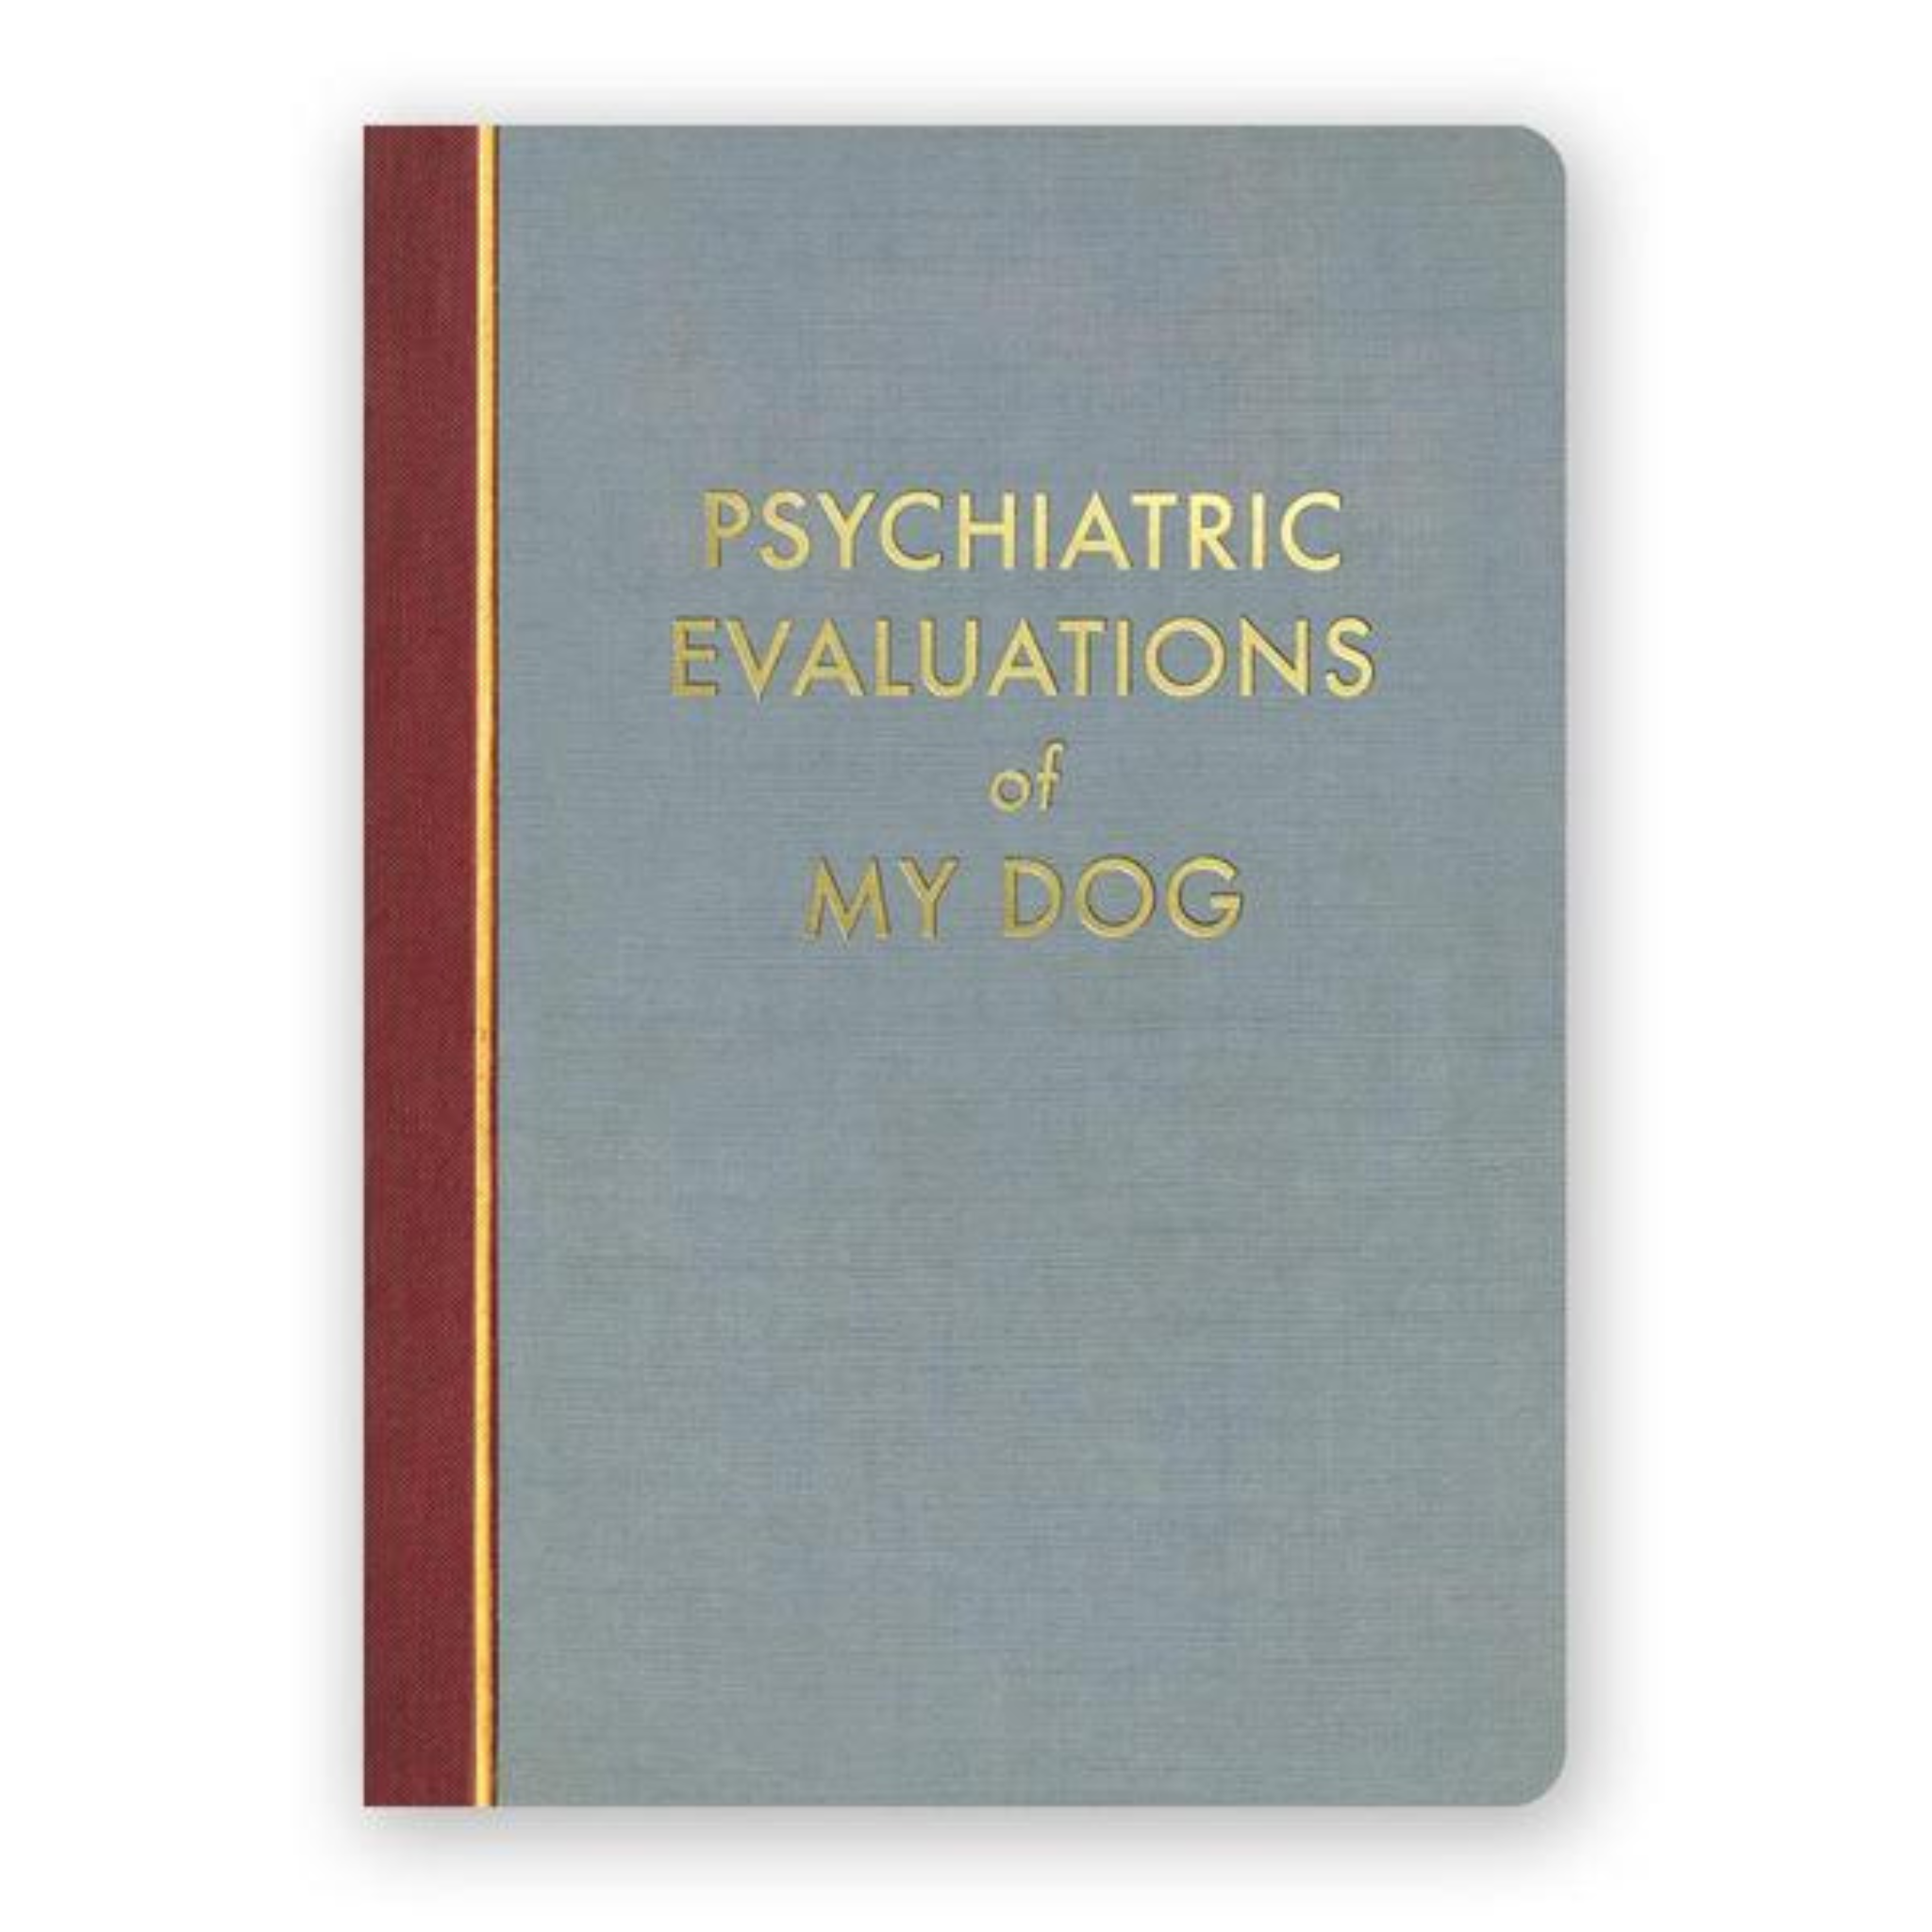 Psychiatric Evaluations of My Dog Journal